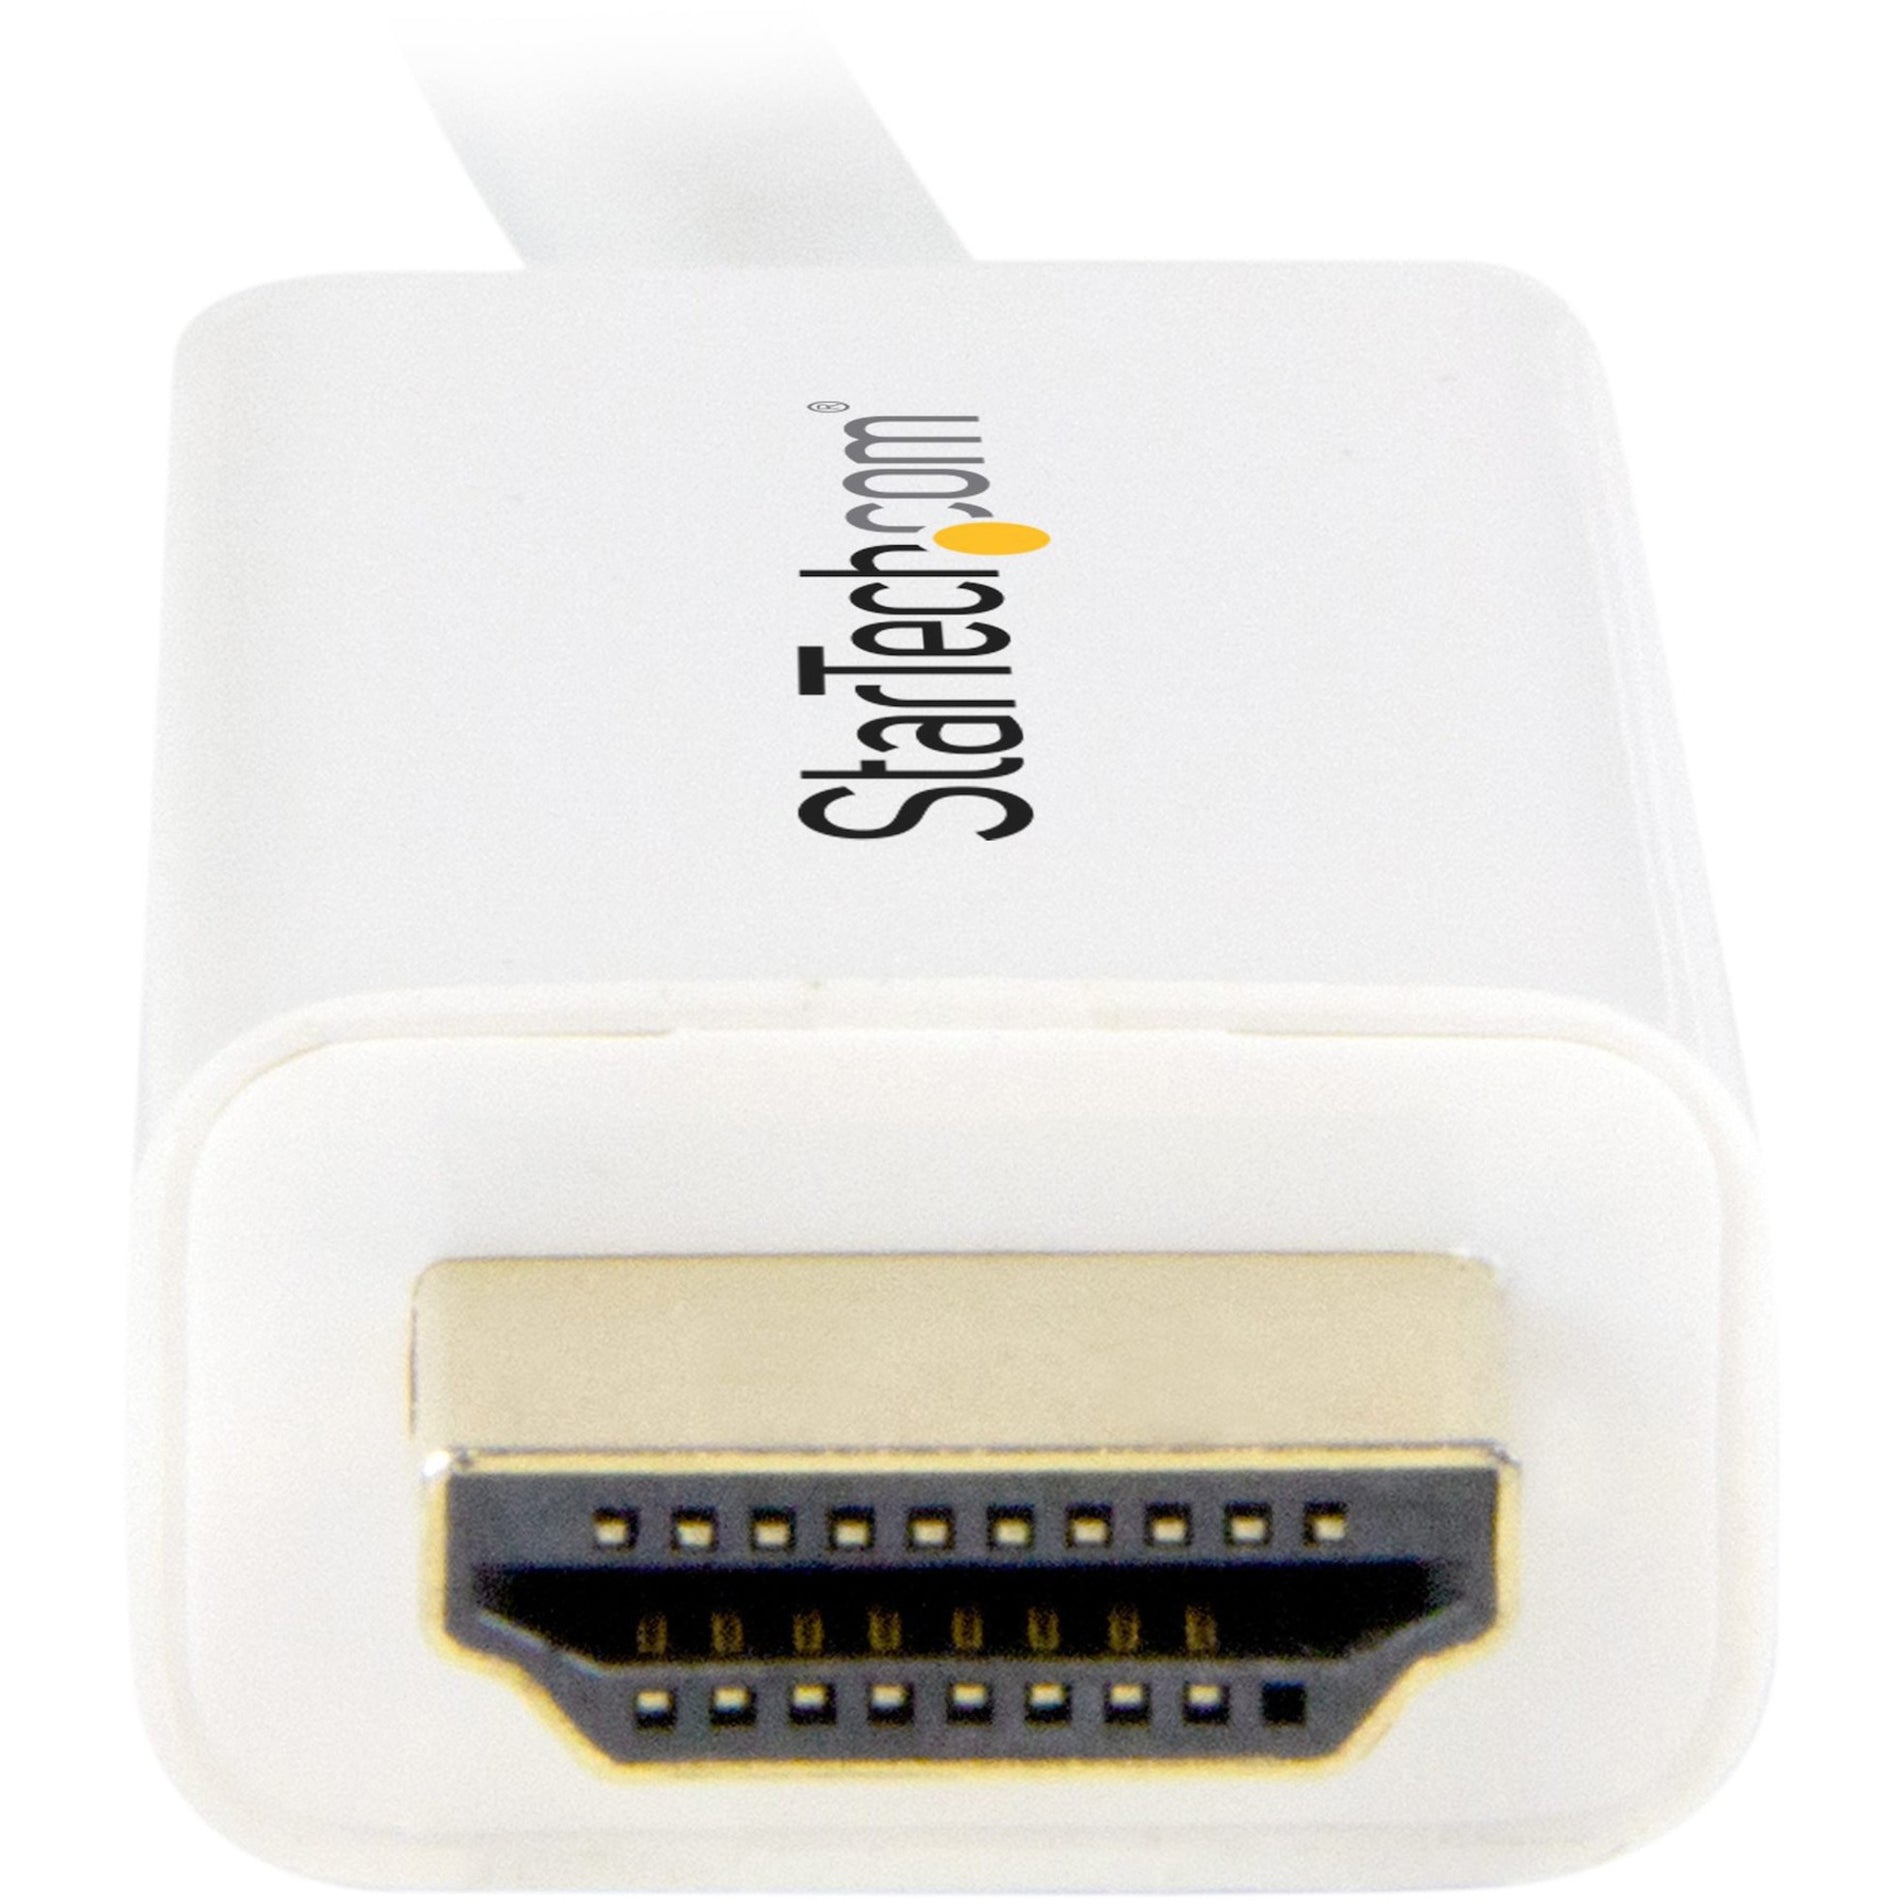 StarTech.com → スターテック・ドットコム MDP2HDMM2MW → MDP2HDMM2MW Mini DisplayPort → ミニディスプレイポート HDMI Converter Cable → HDMIコンバーターケーブル 6 ft (2m) → 6フィート（2m） 4K → 4K White → ホワイト